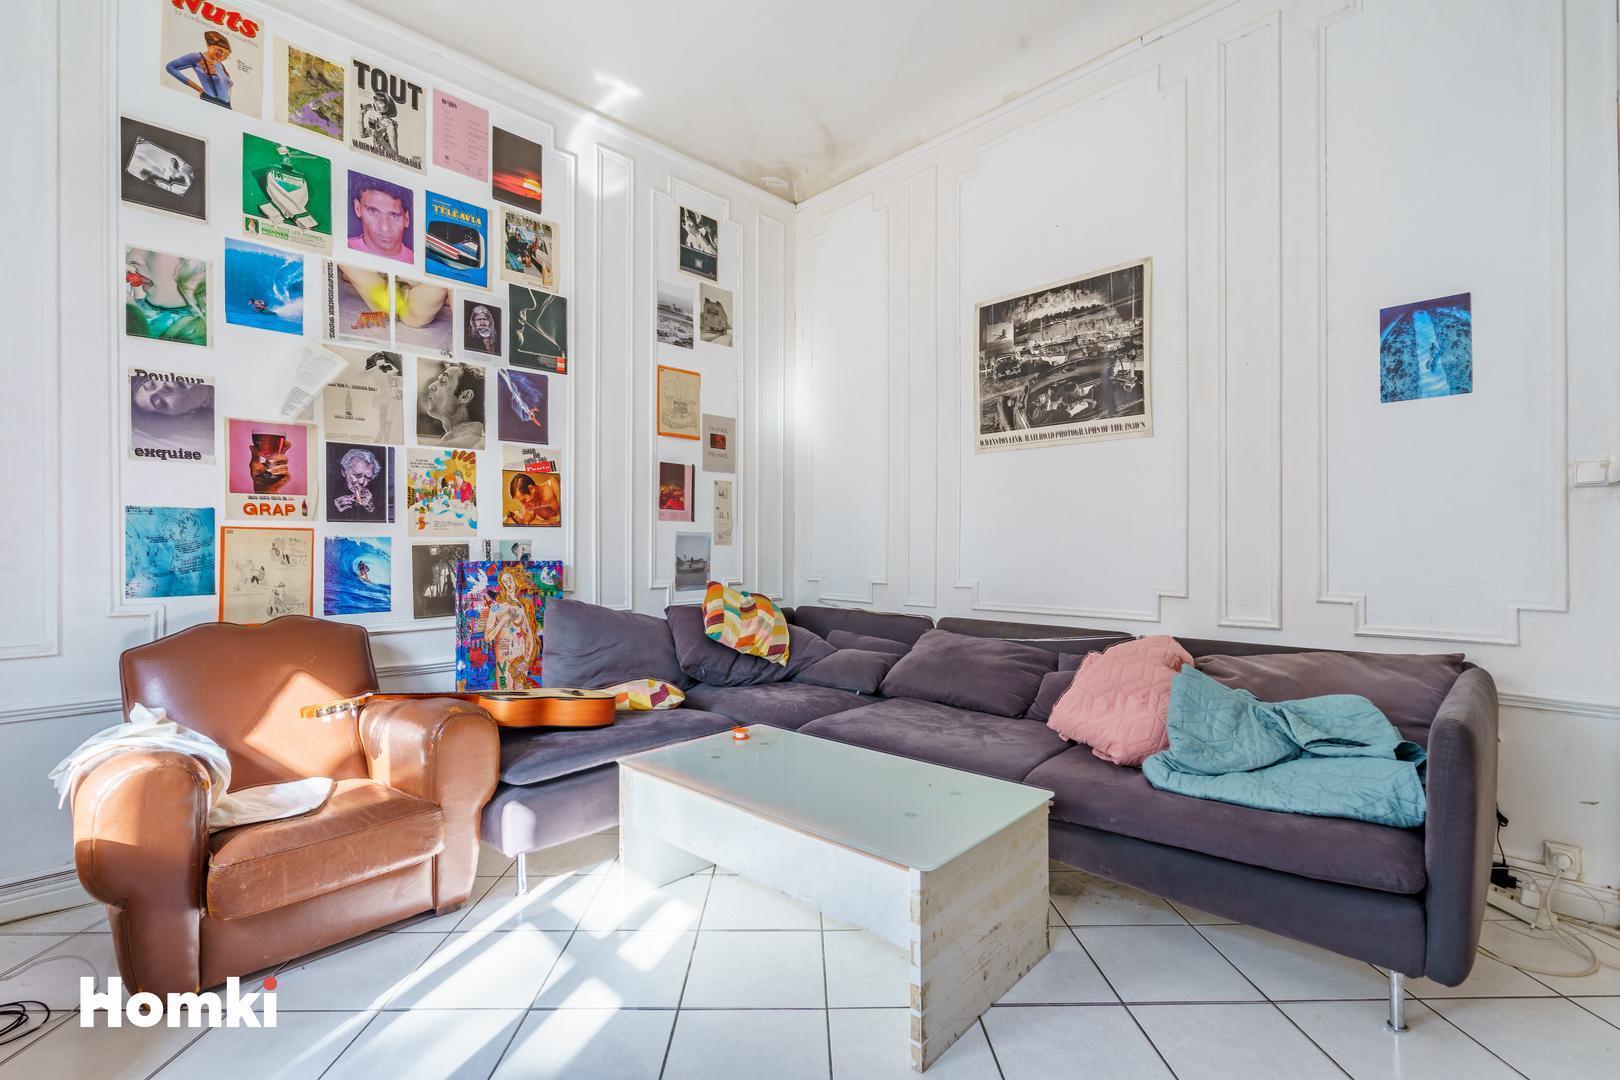 Homki - Vente Appartement  de 80.0 m² à Biarritz 64200